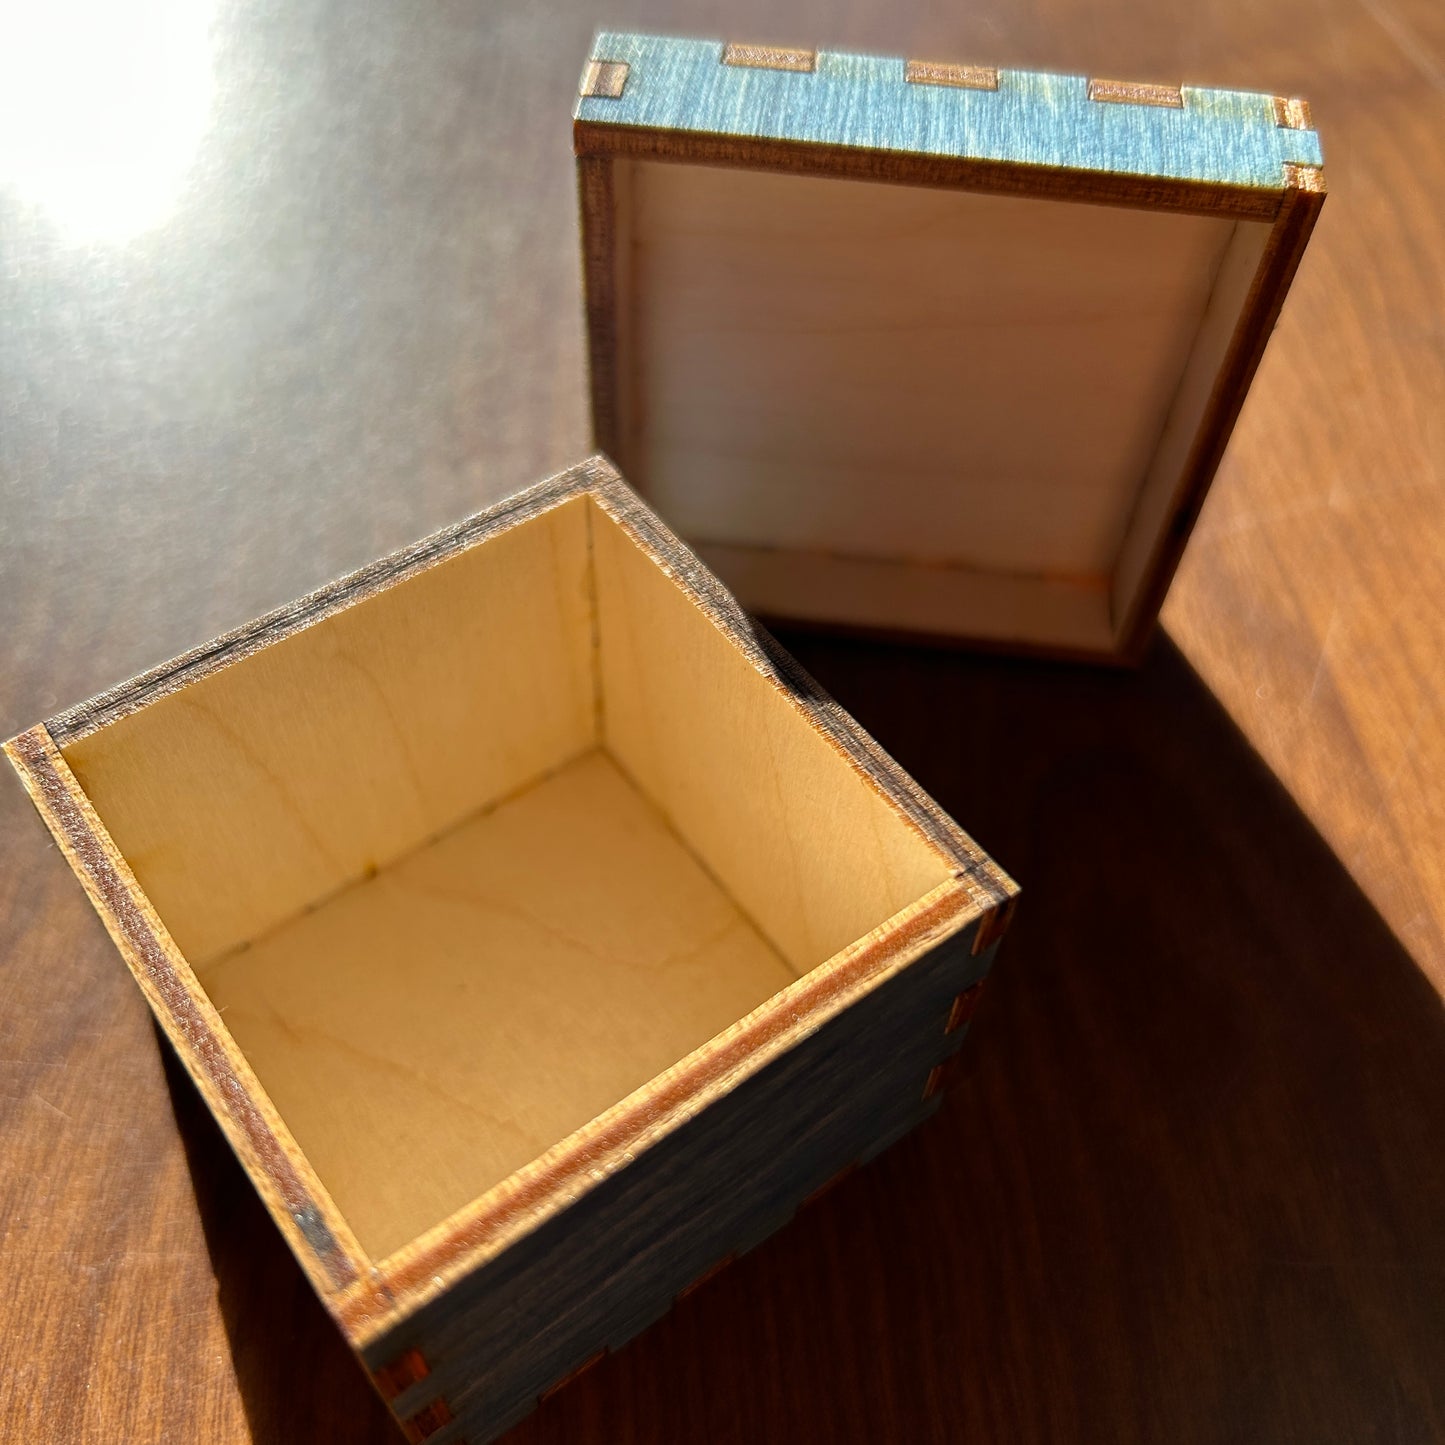 The puffins tiny treasure box